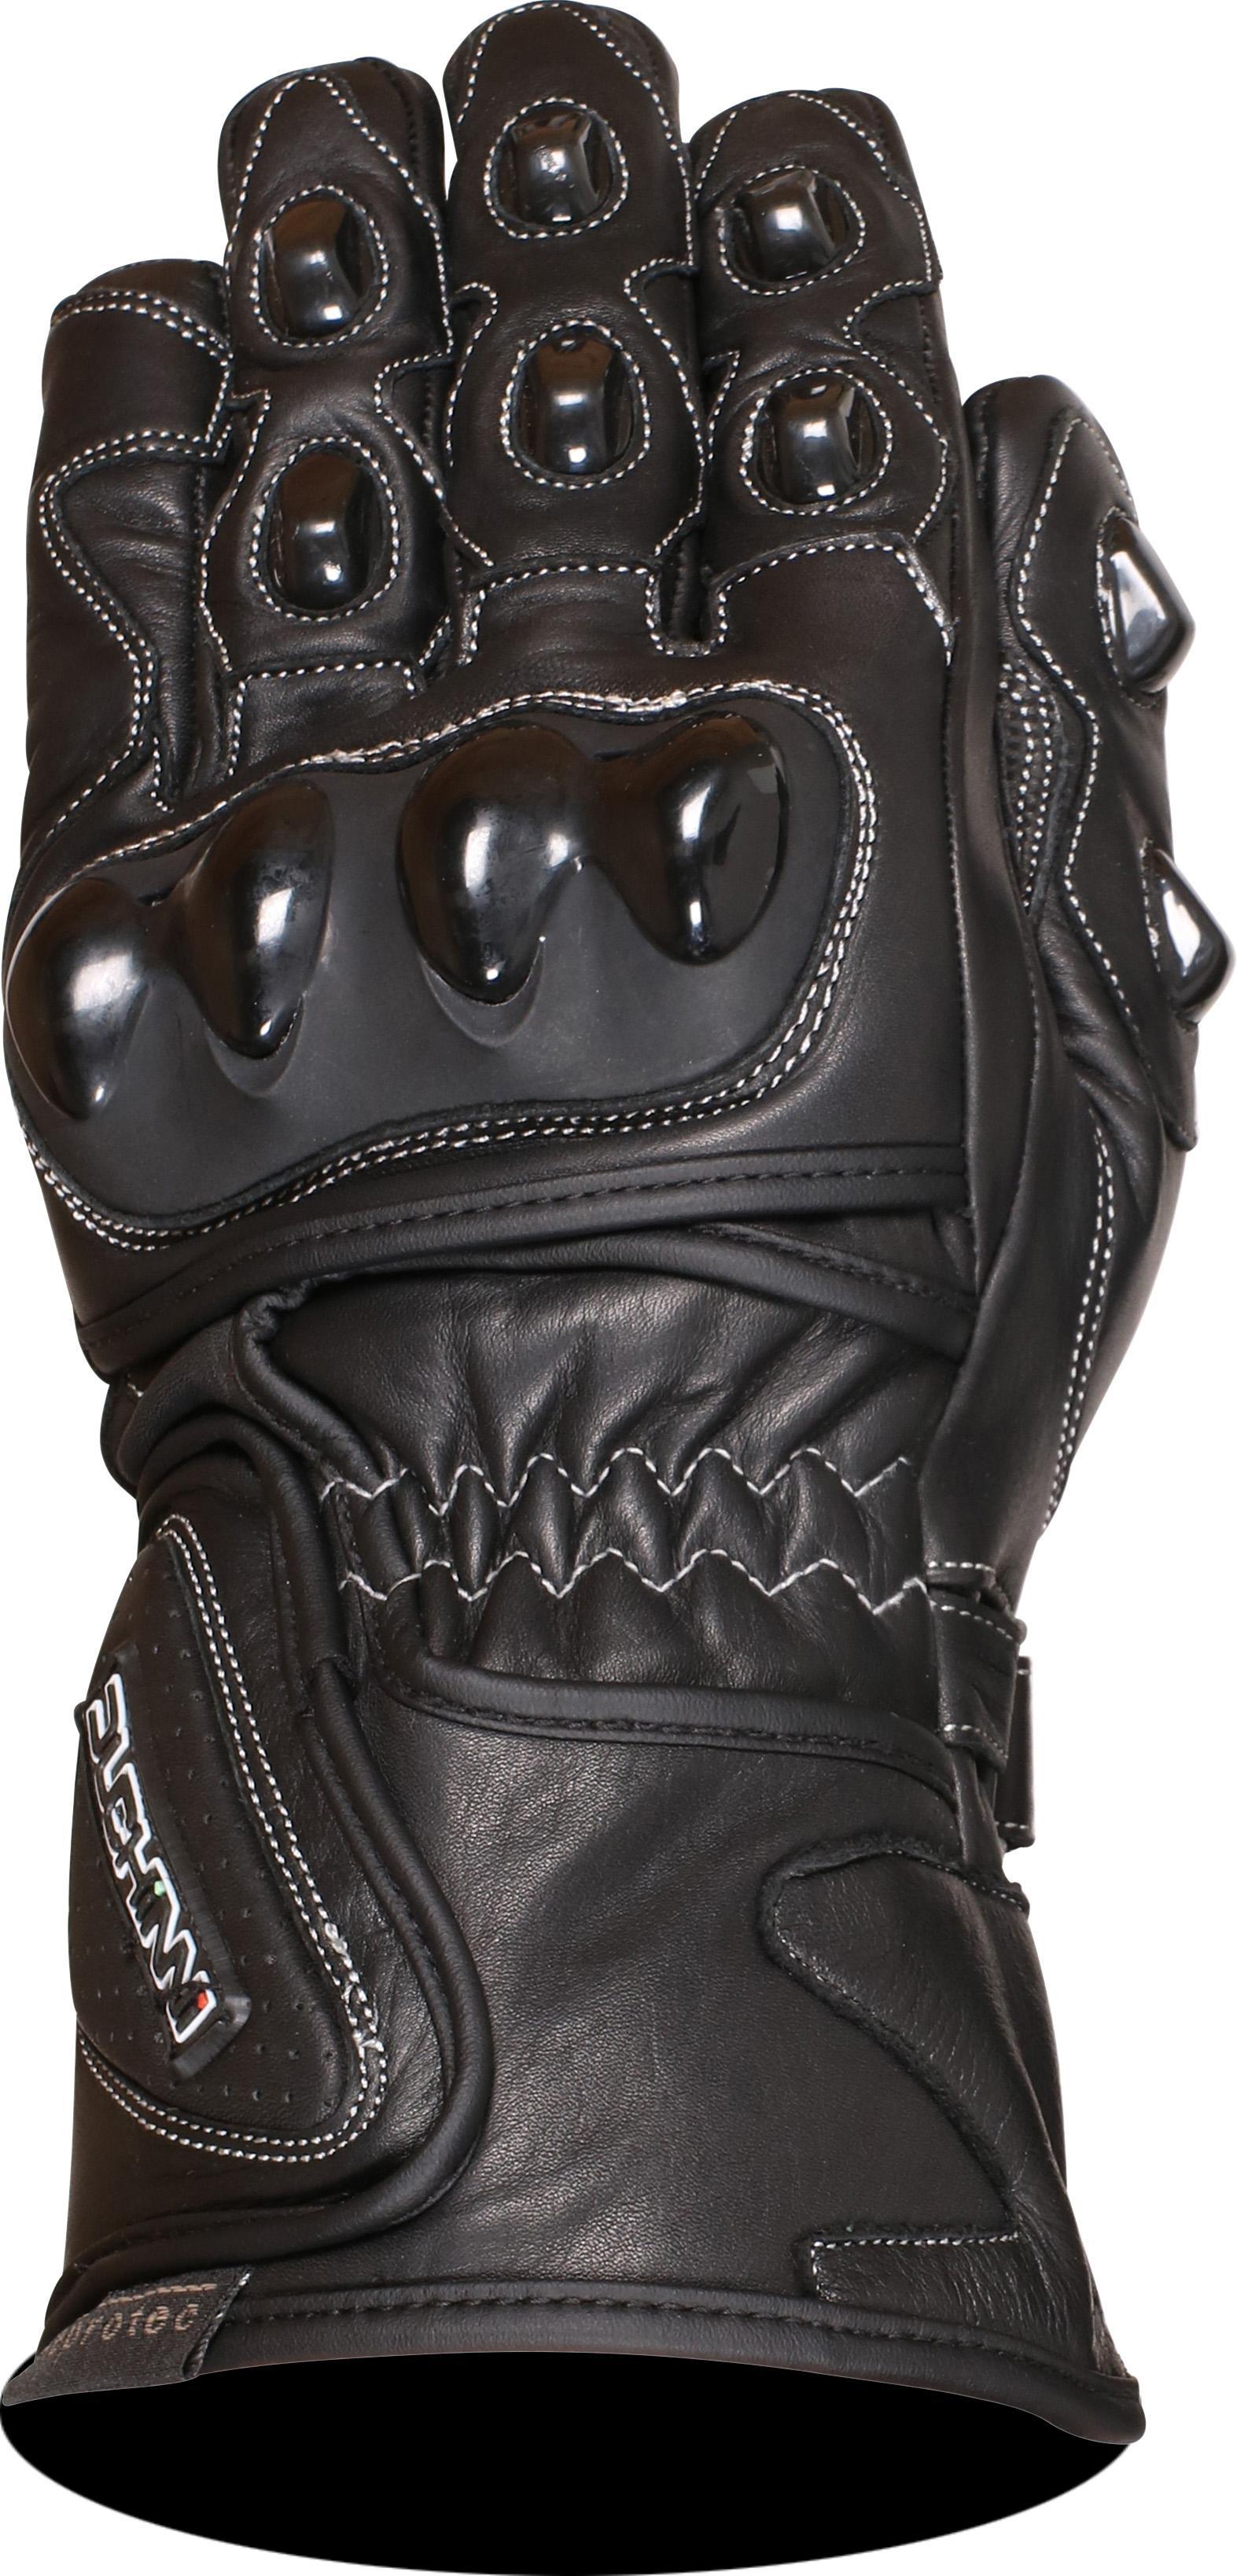 Duchinni Dr1 Motorcycle Gloves - Black, L